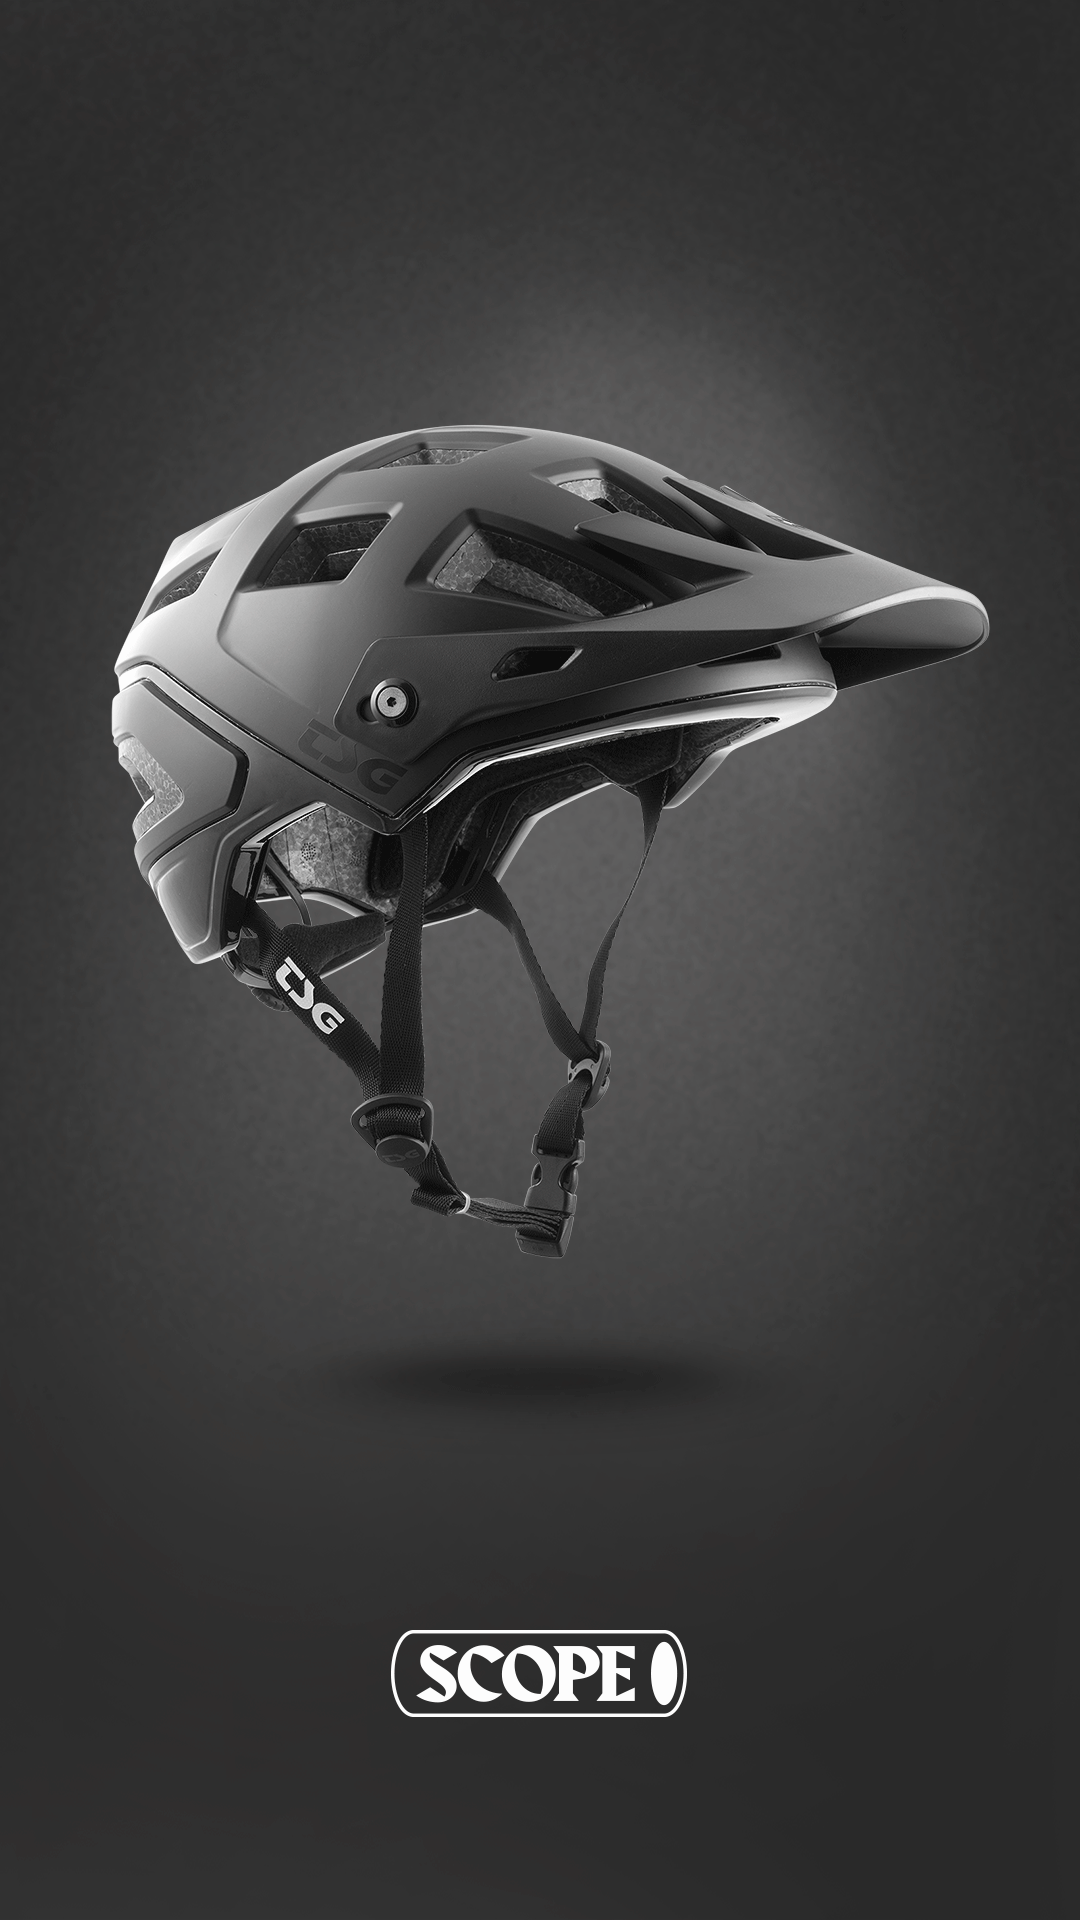 Helmet Bikehelmet GIF - Find & Share on GIPHY